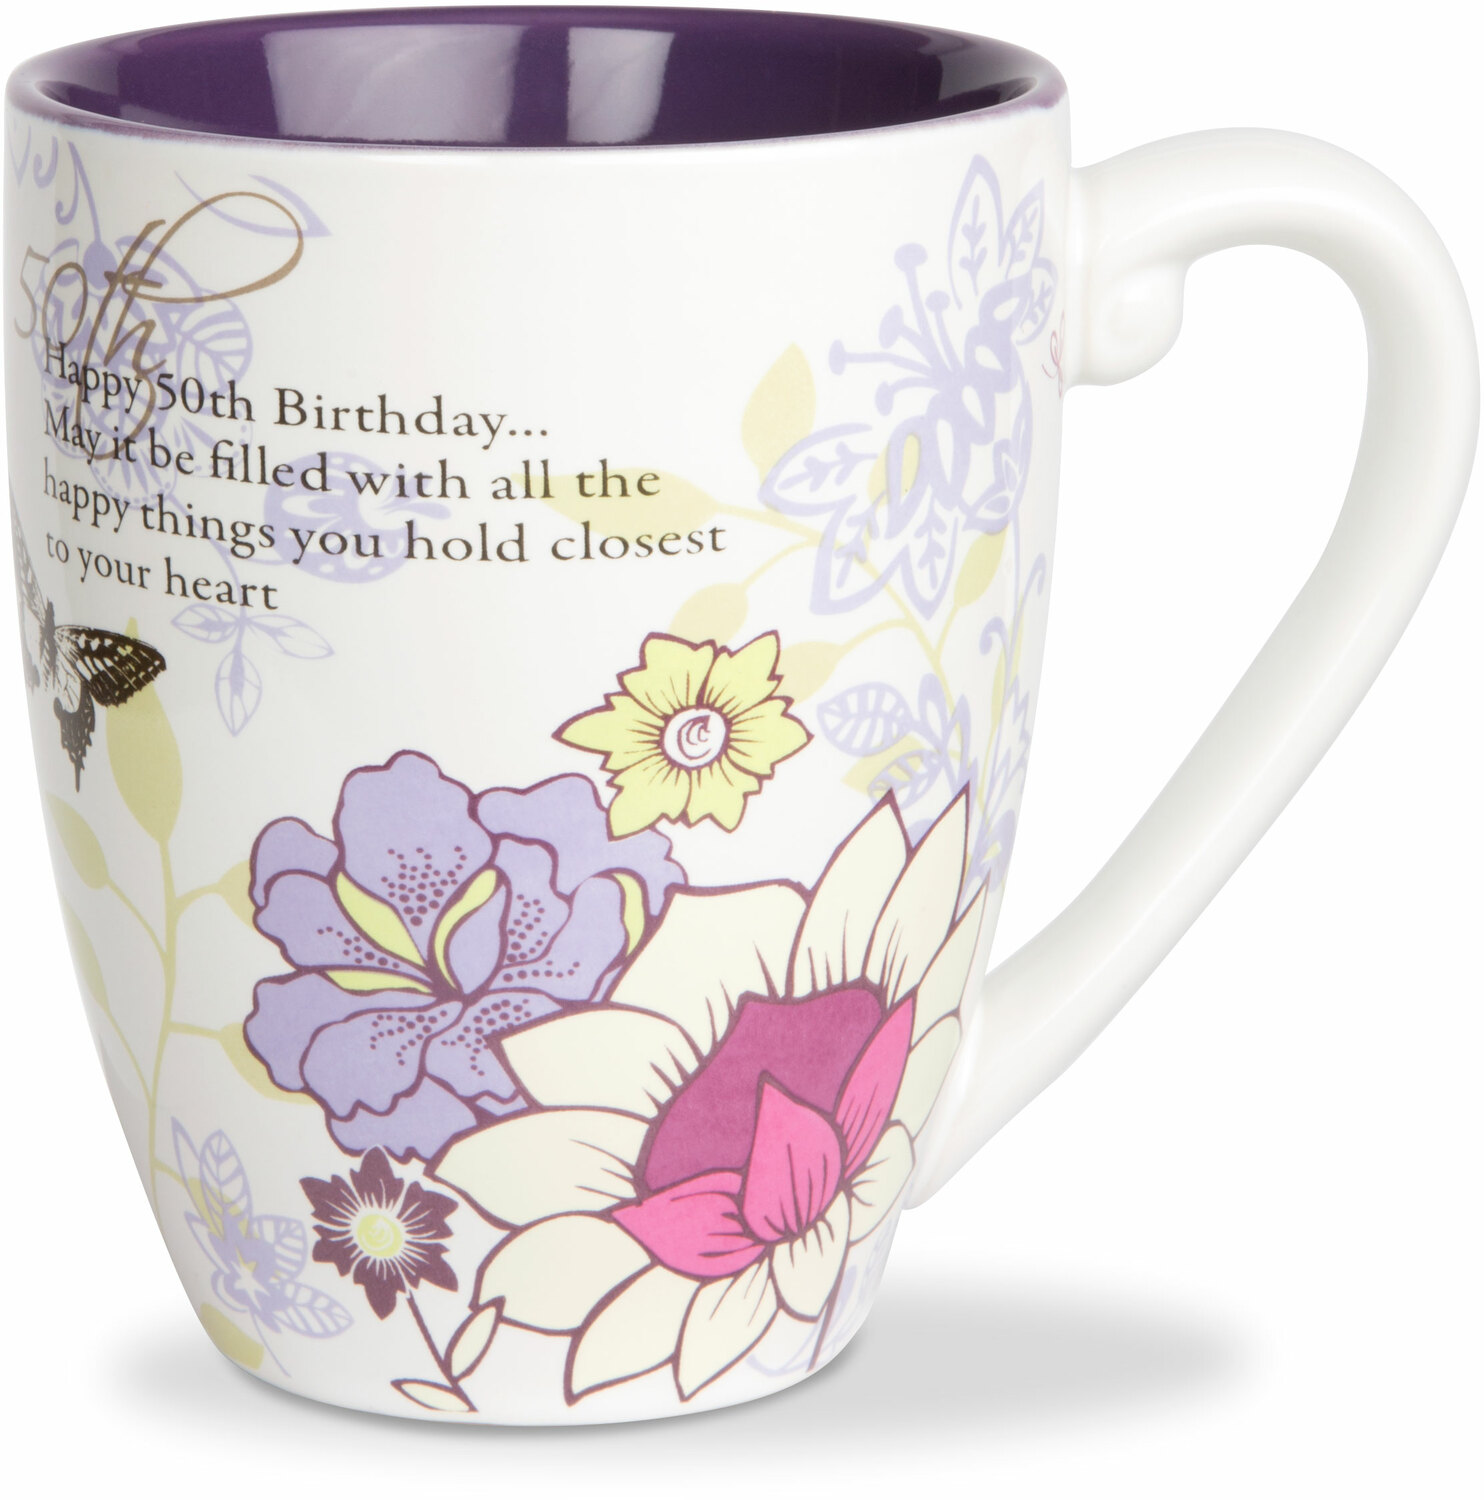 Pavilion - Best Mom Ever Tan and Purple Large 20 oz Ceramic Coffee Mug Tea Cup